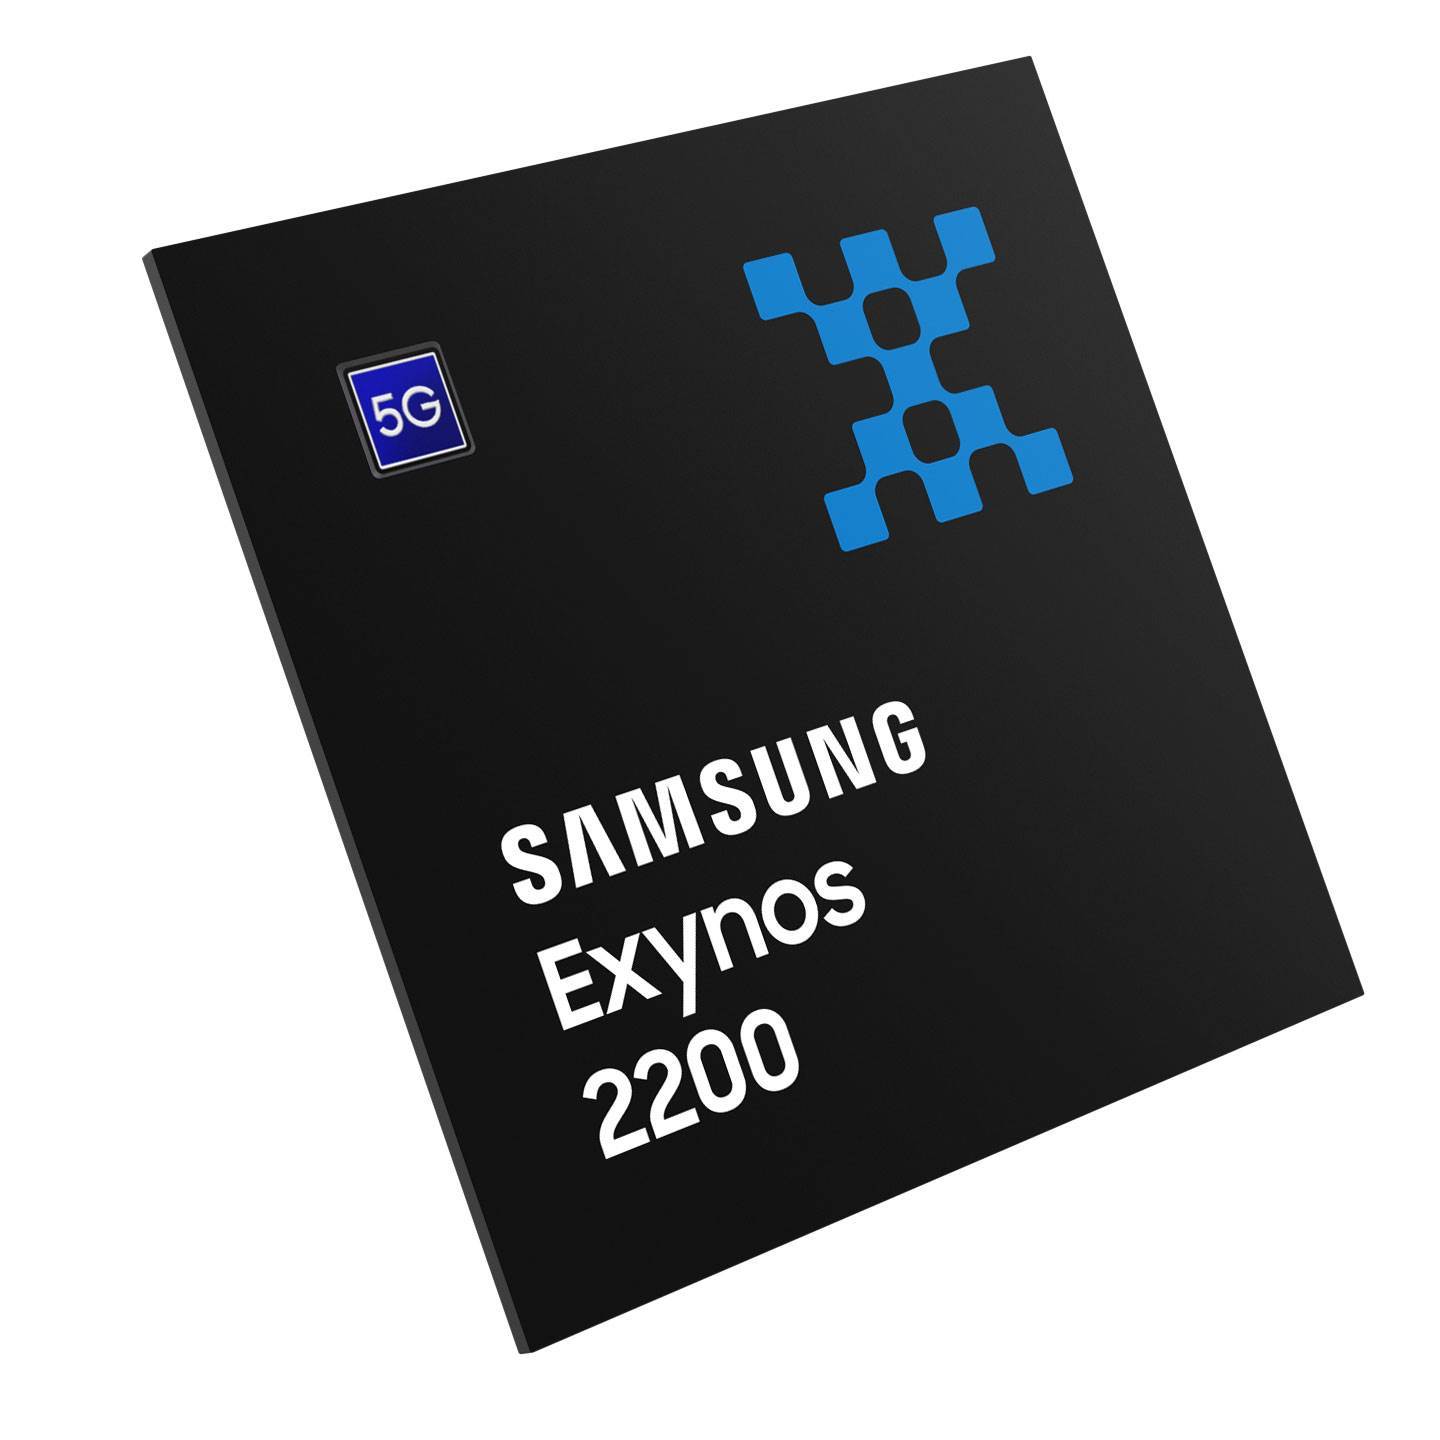  Samsung-Exynos-2200.jpeg 